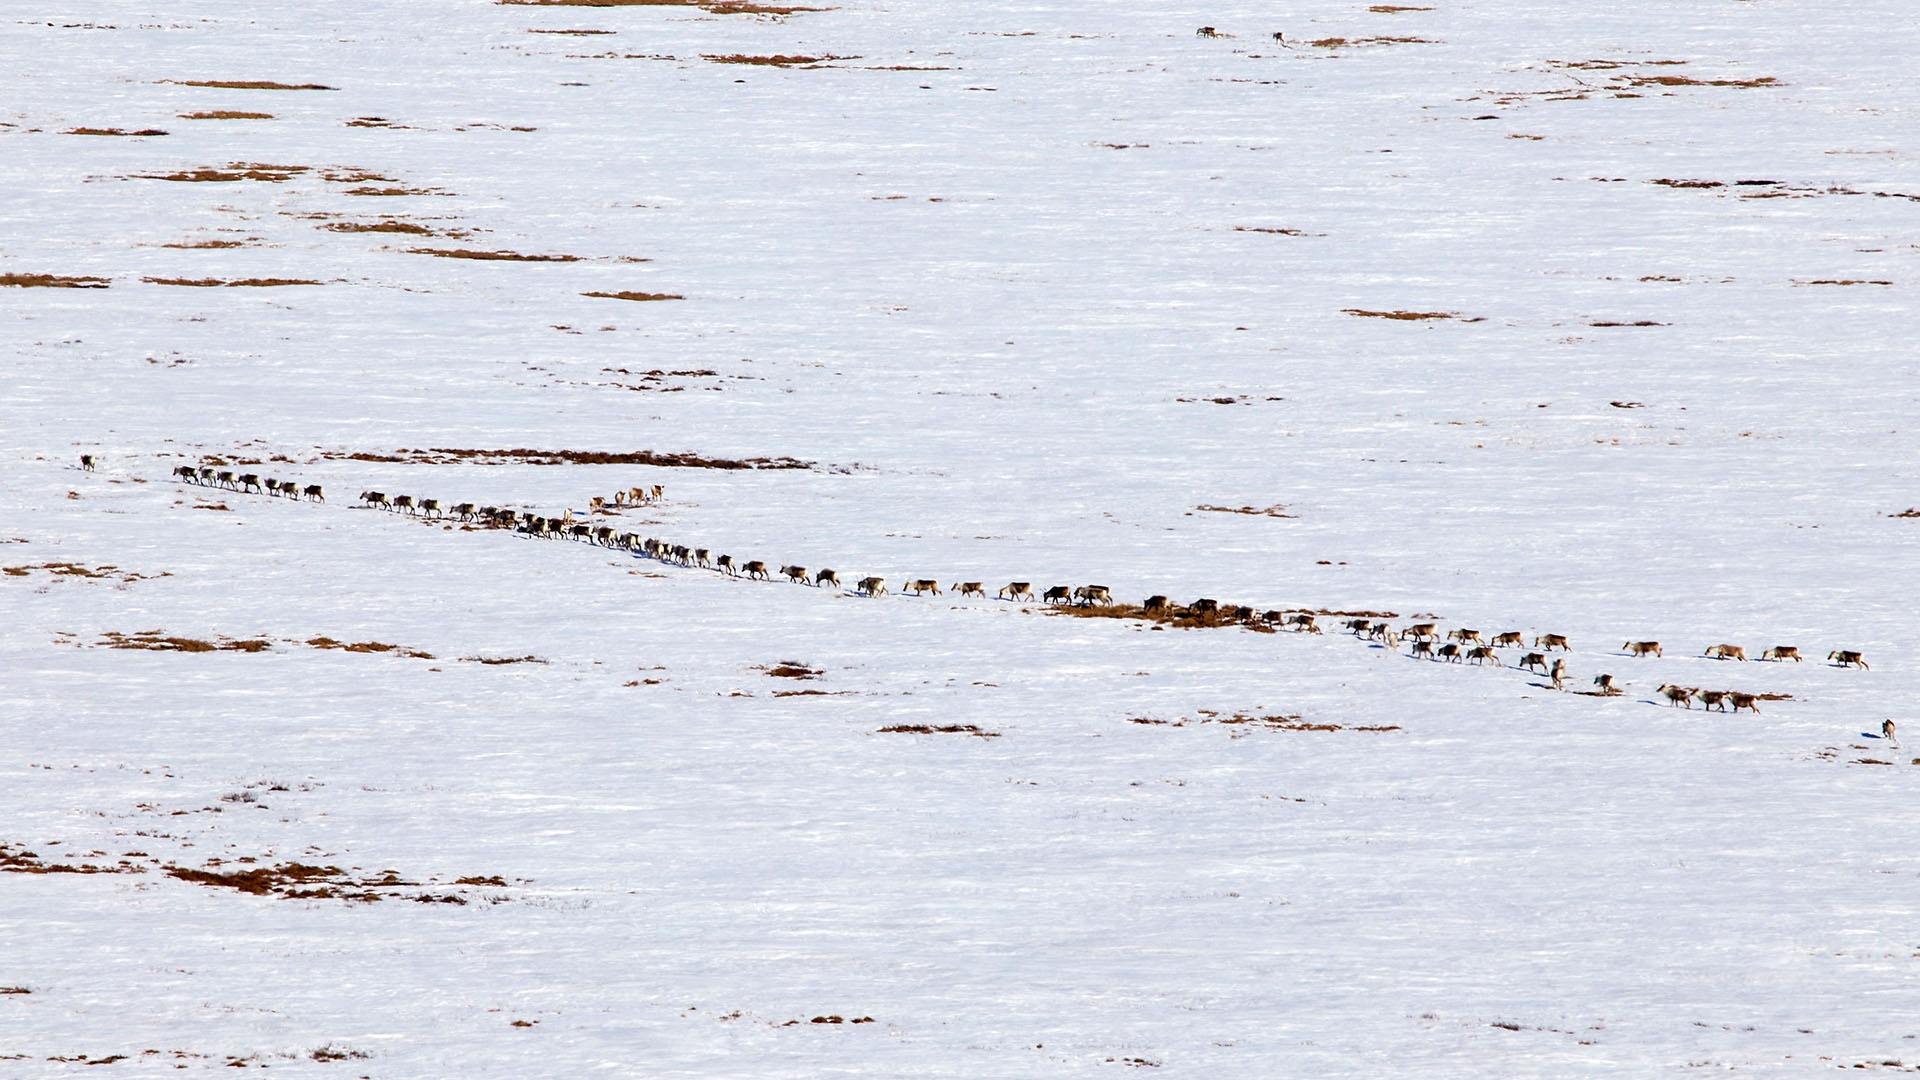 A line of Porcupine herd caribou cross the landscape.